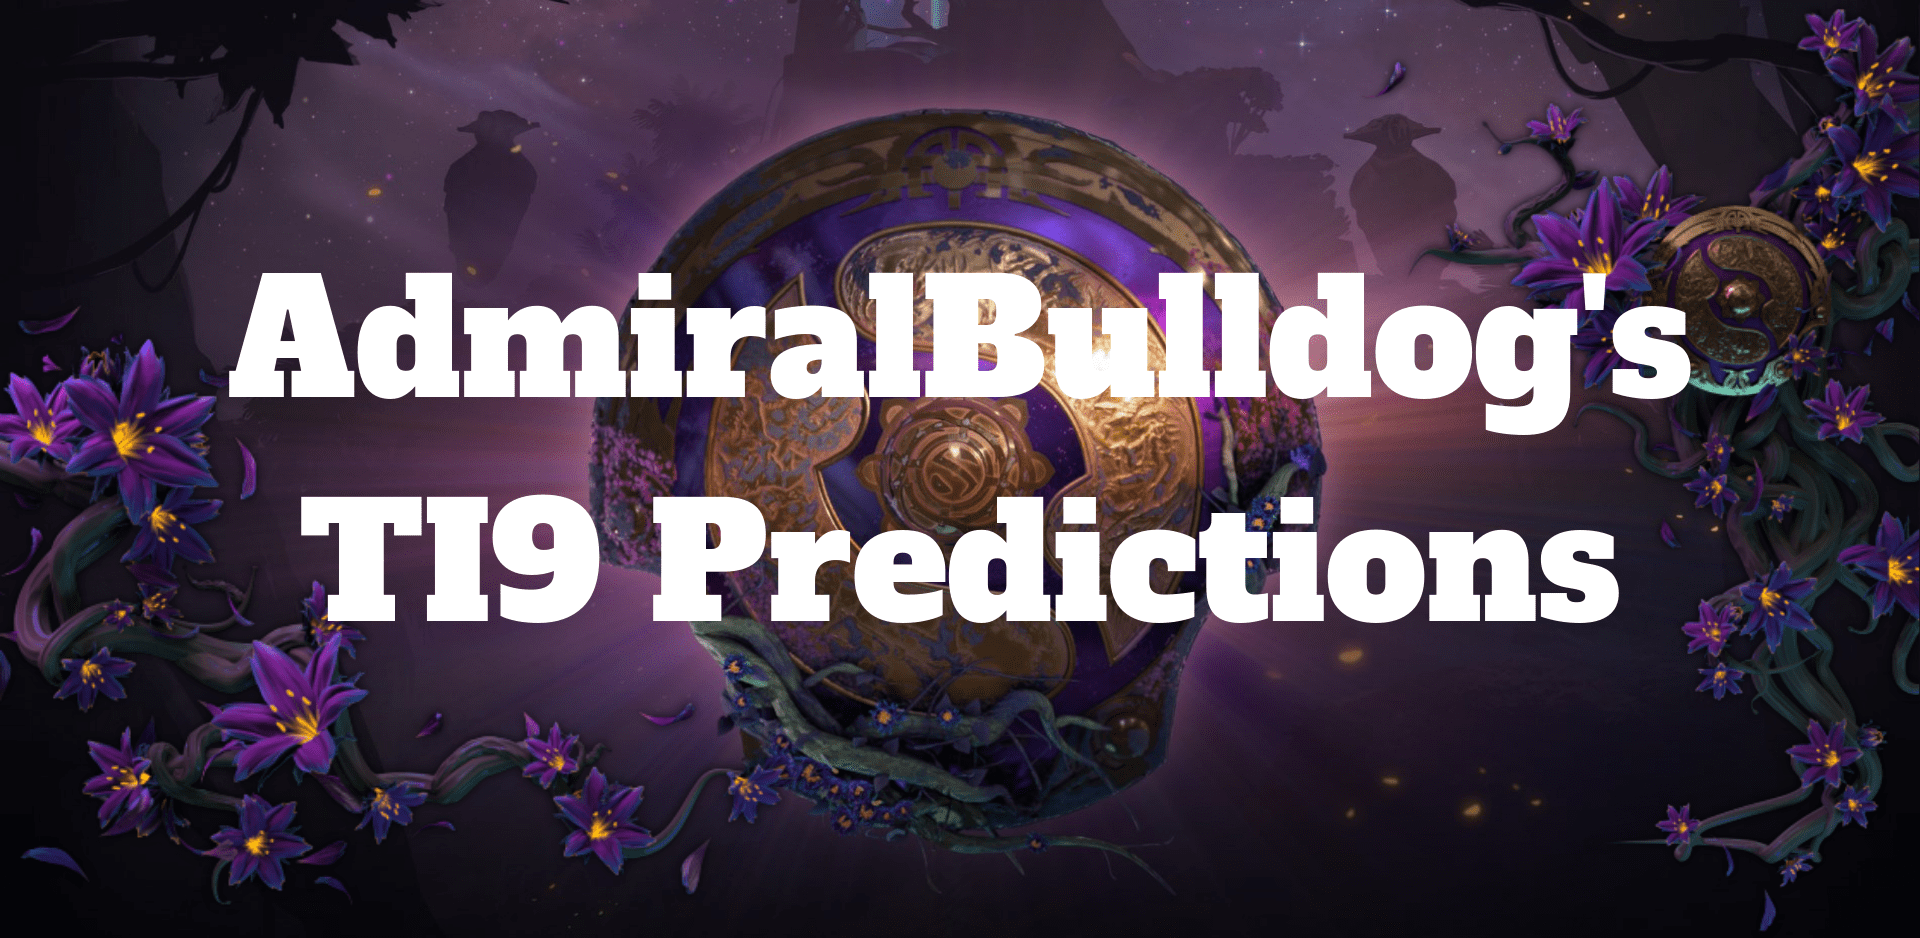 The International 2019 predictions by AdmiralBulldog